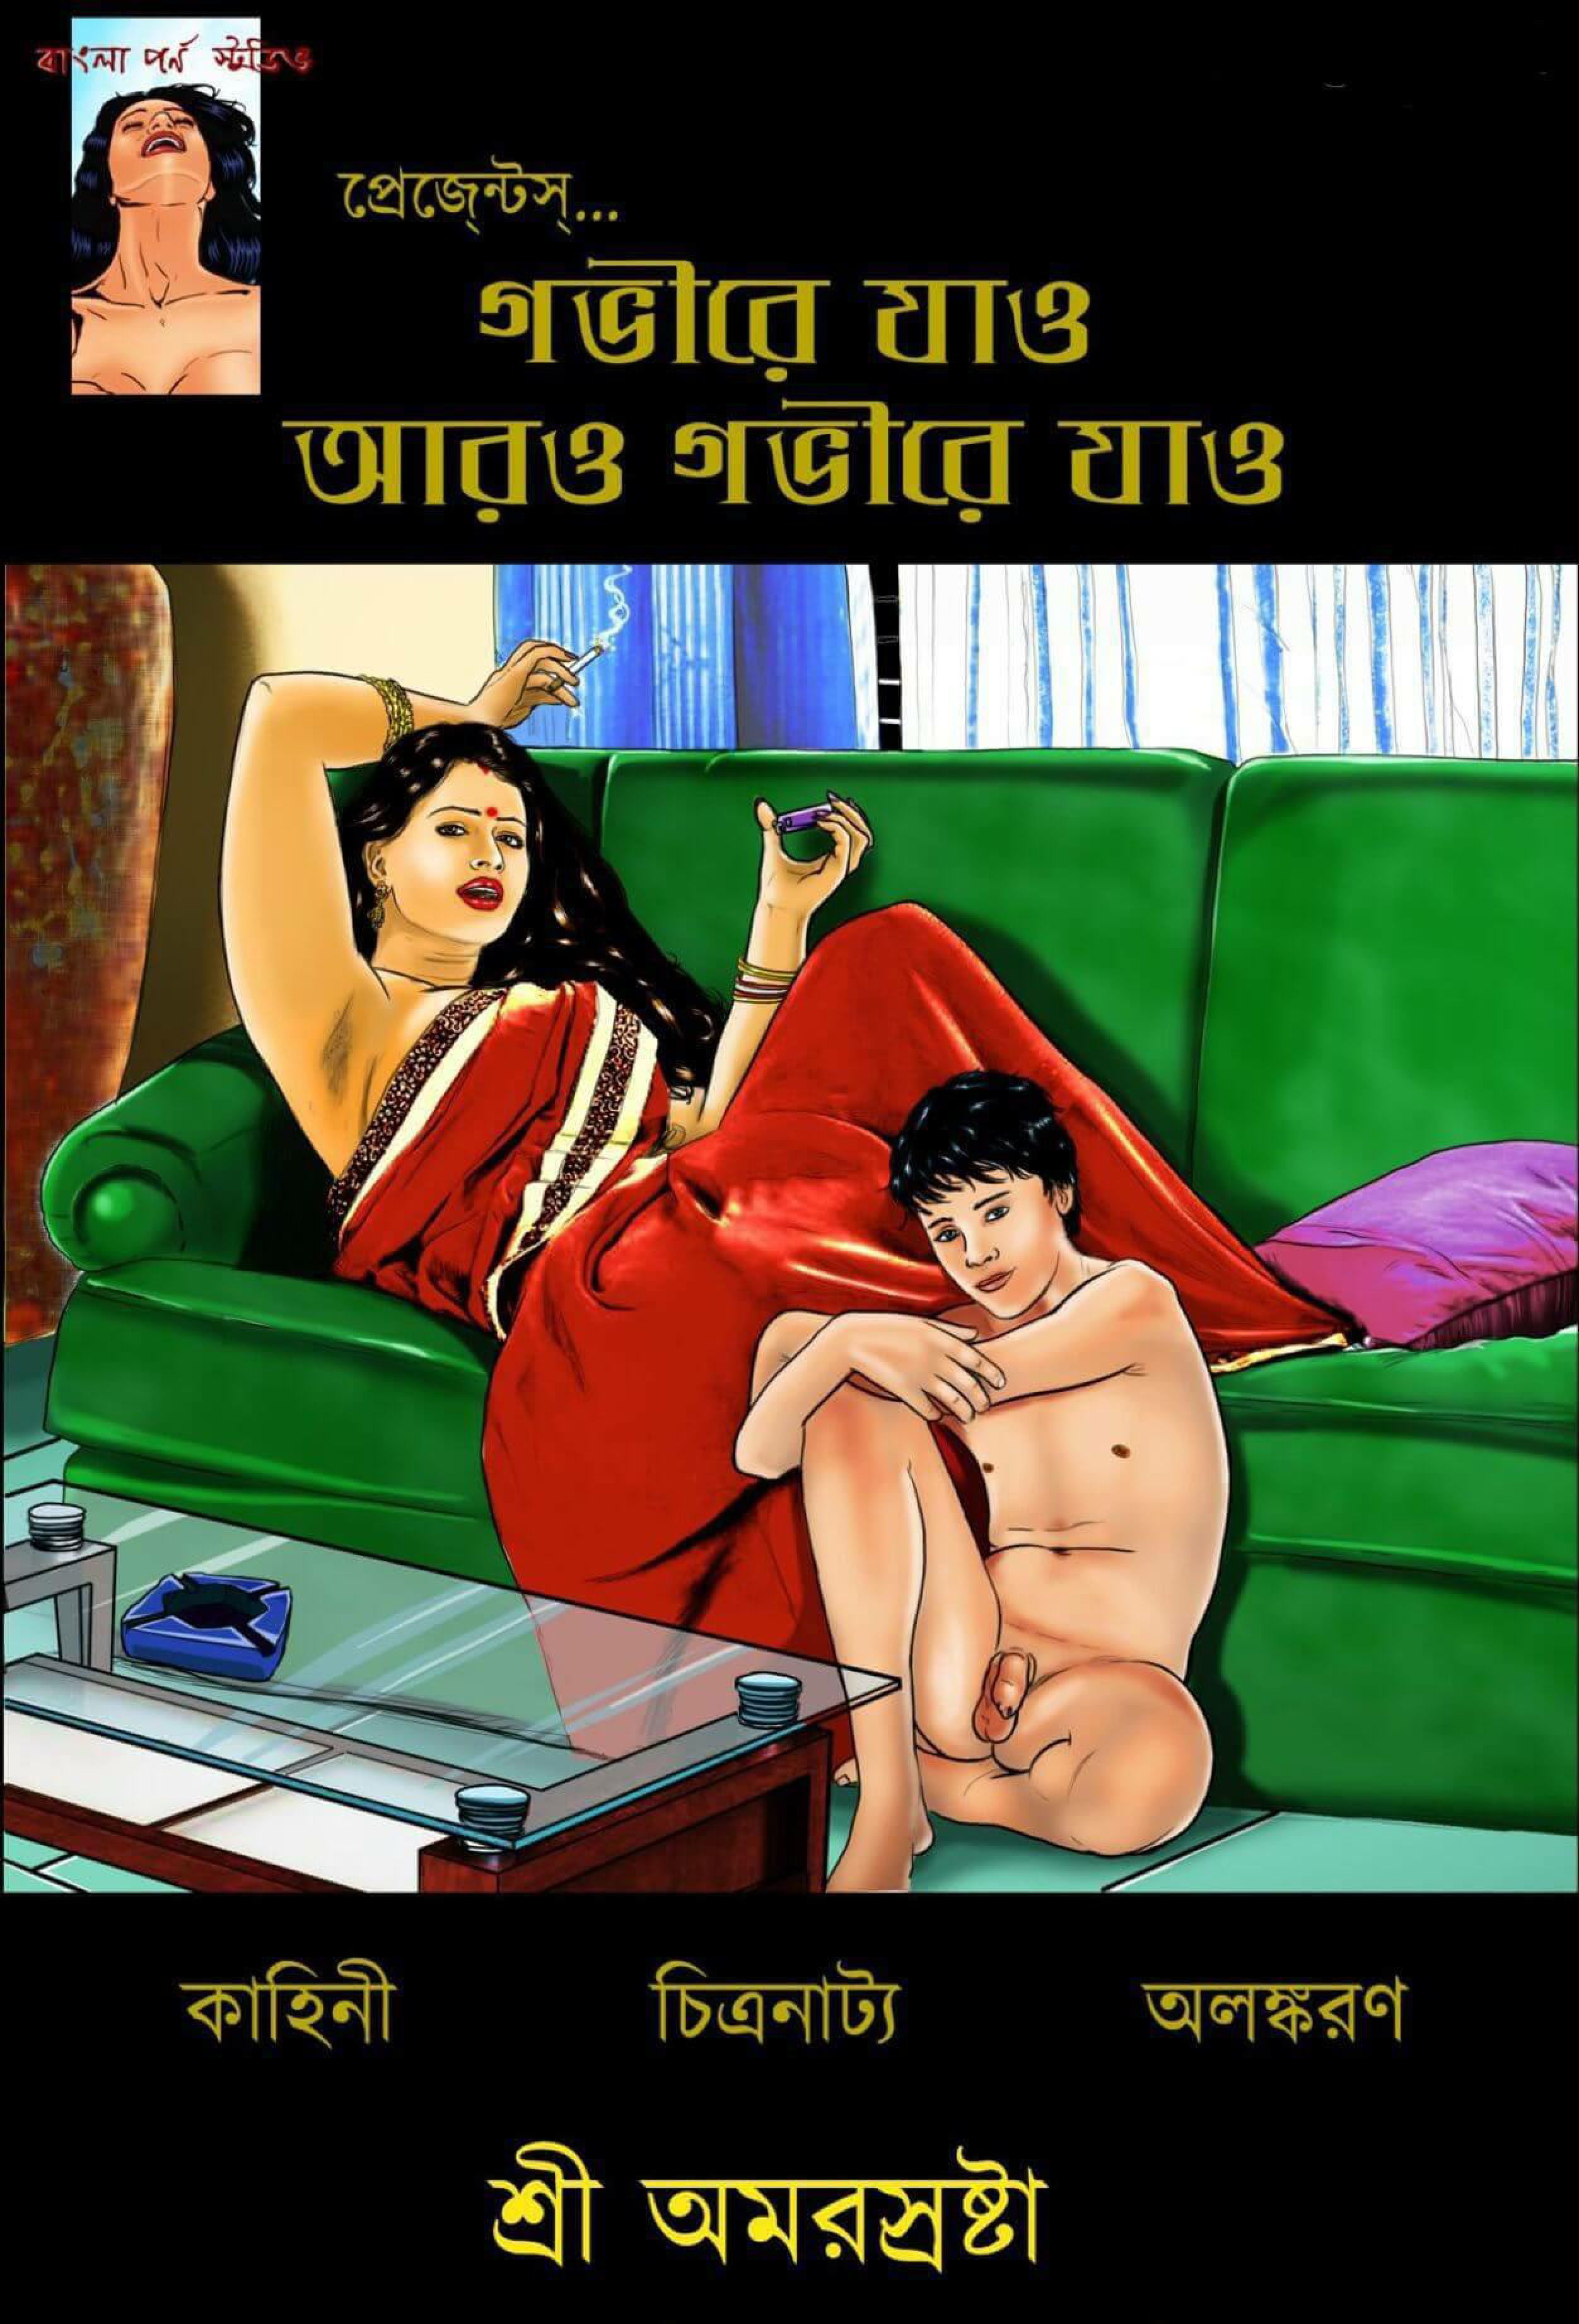 Porn comics in bengali